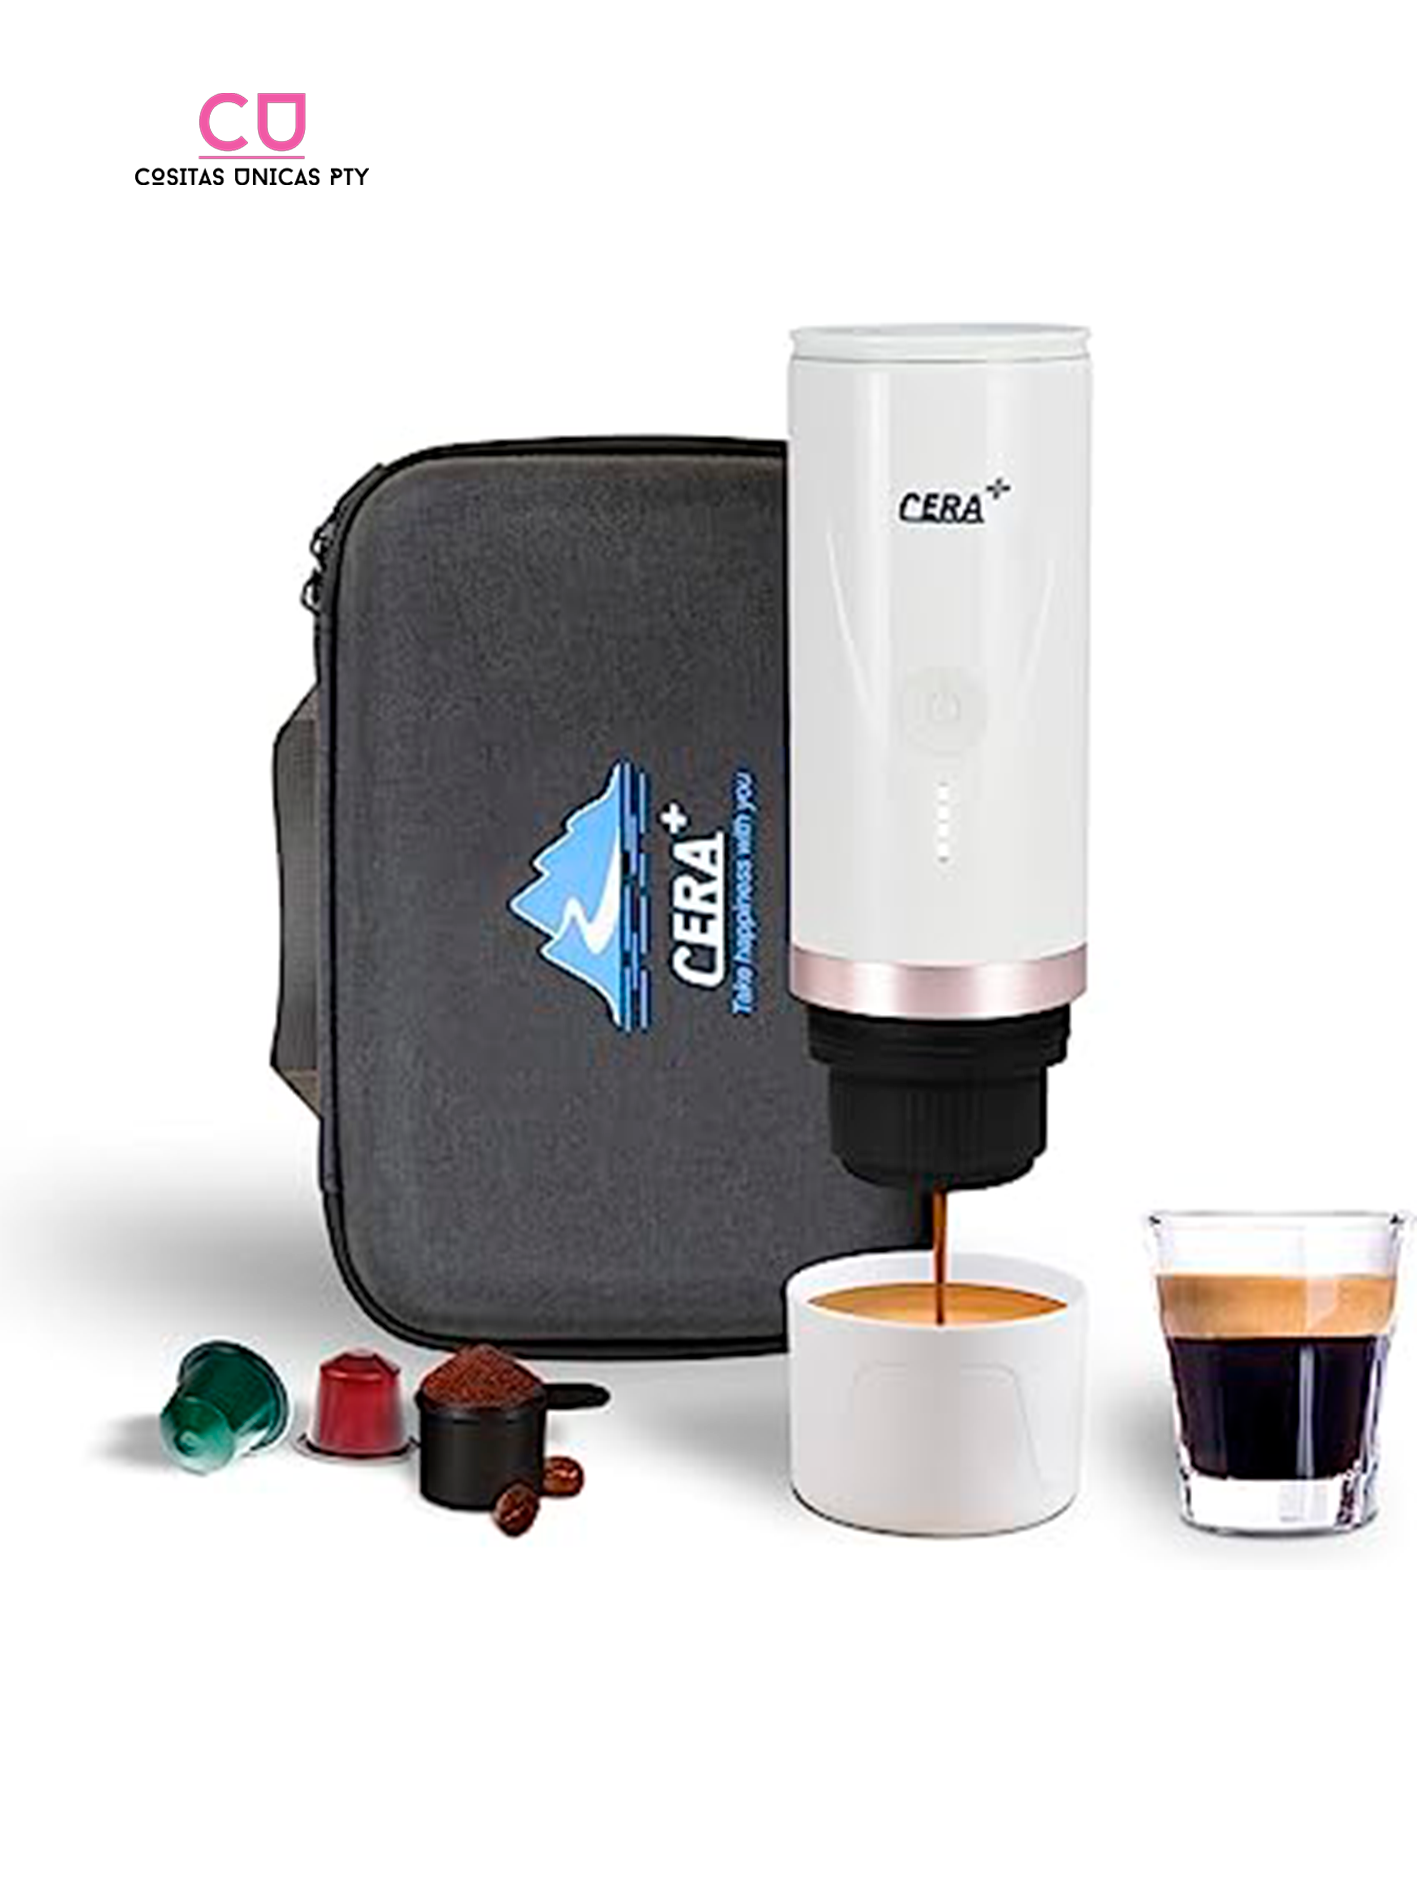 Cafetera eléctrica portátil, mini máquina de espresso recargable con f